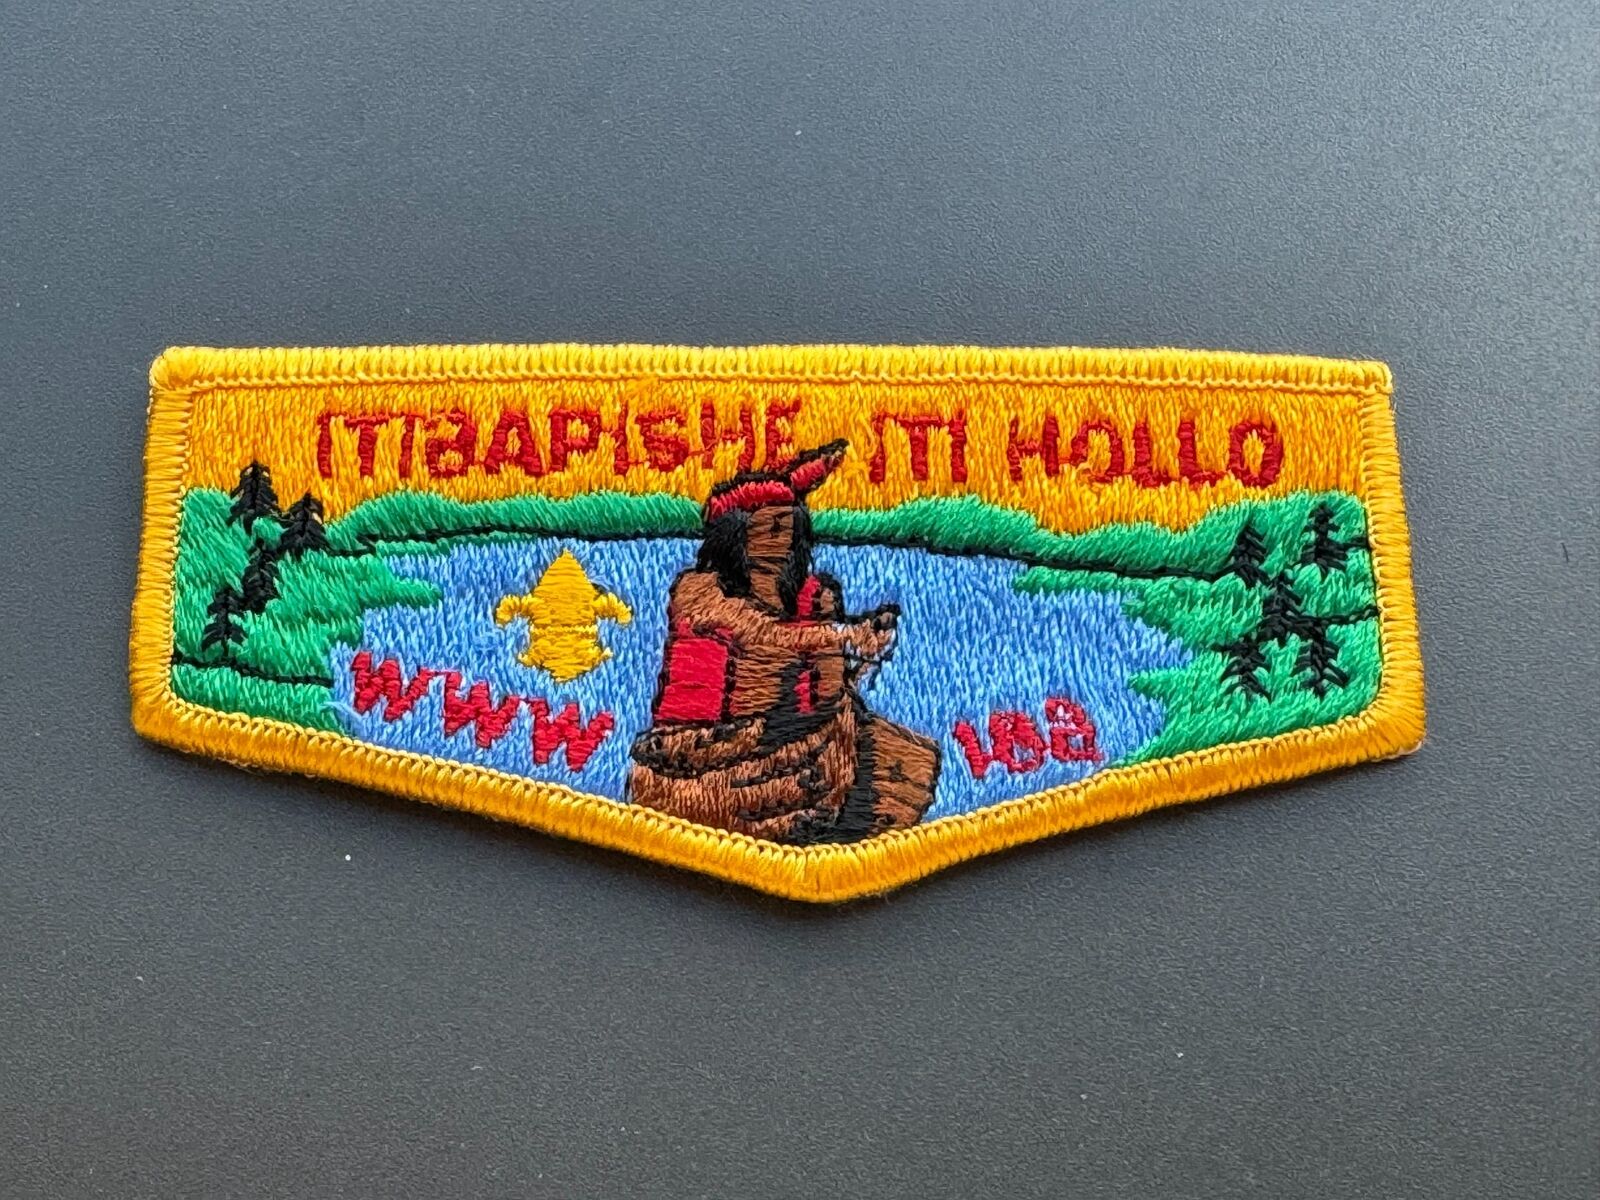 OA, Iti Bapishe Iti Hollo (188) Brotherhood Flap (S-11)